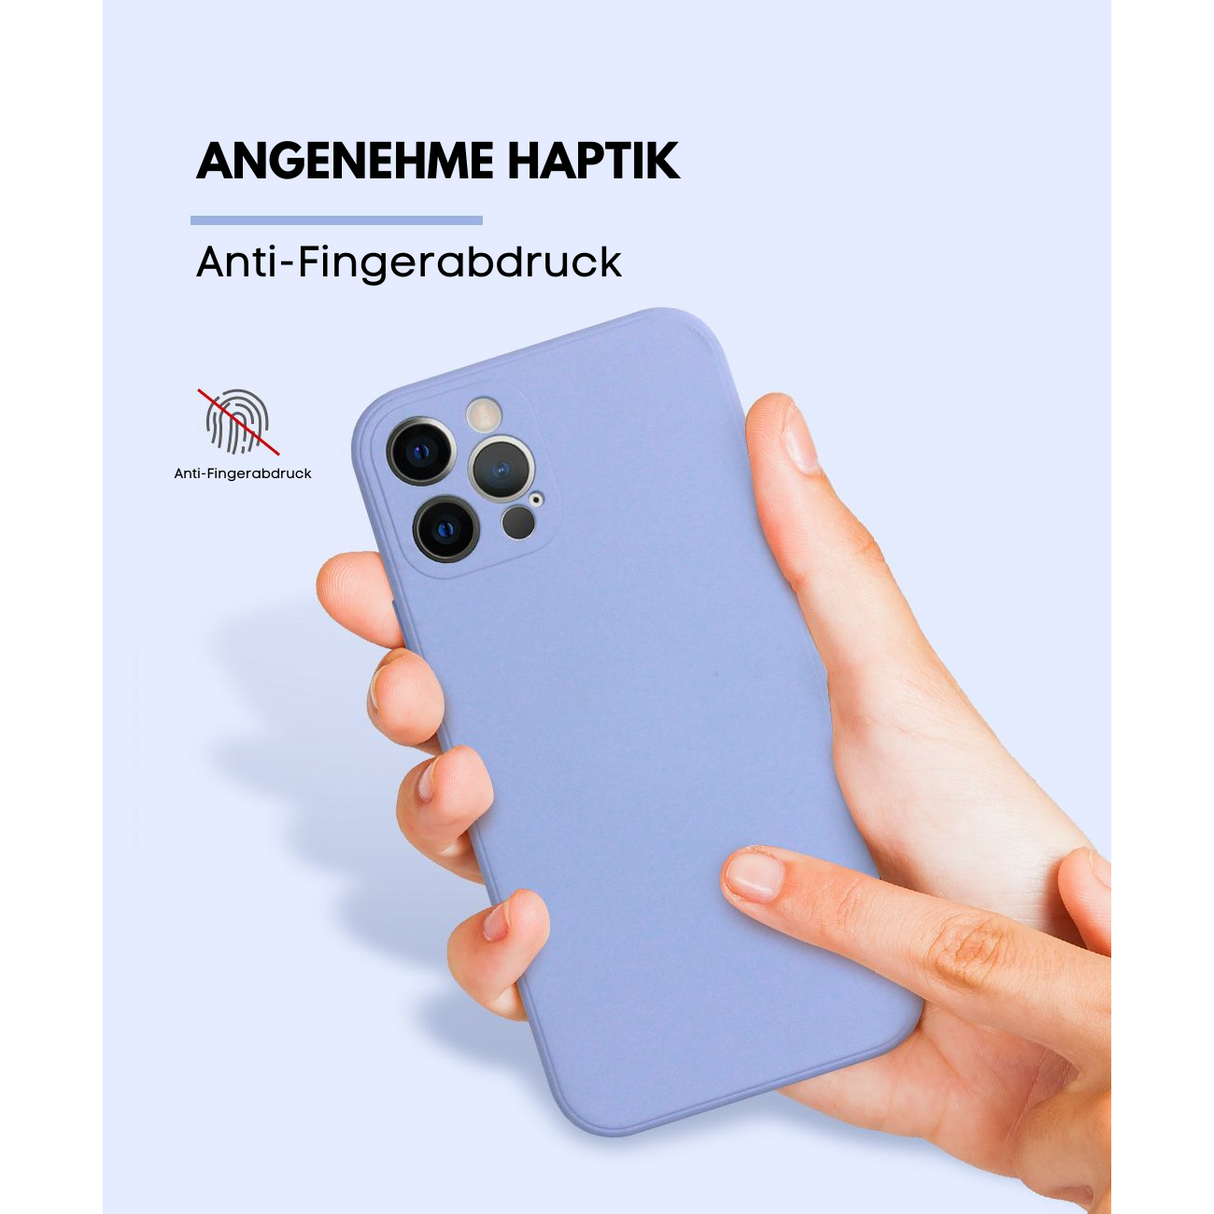 Ambulance smartphone case